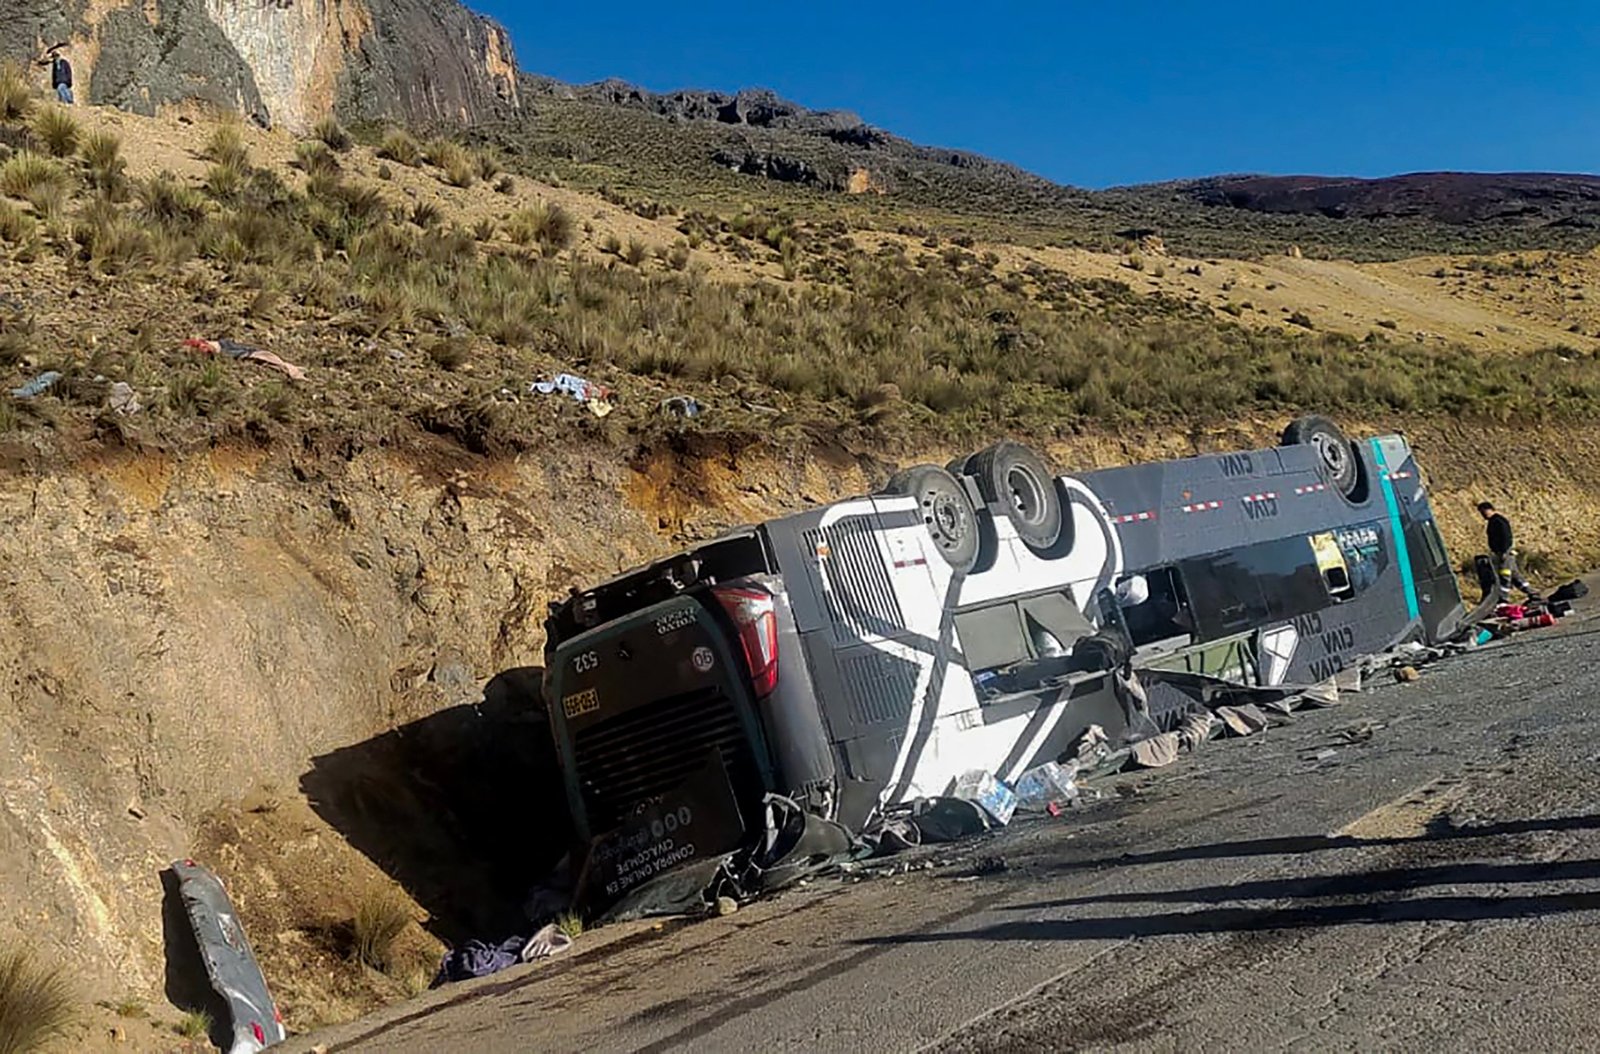 Bus crash in popular tourist spot kills 25 in mountain region investigation ongoing